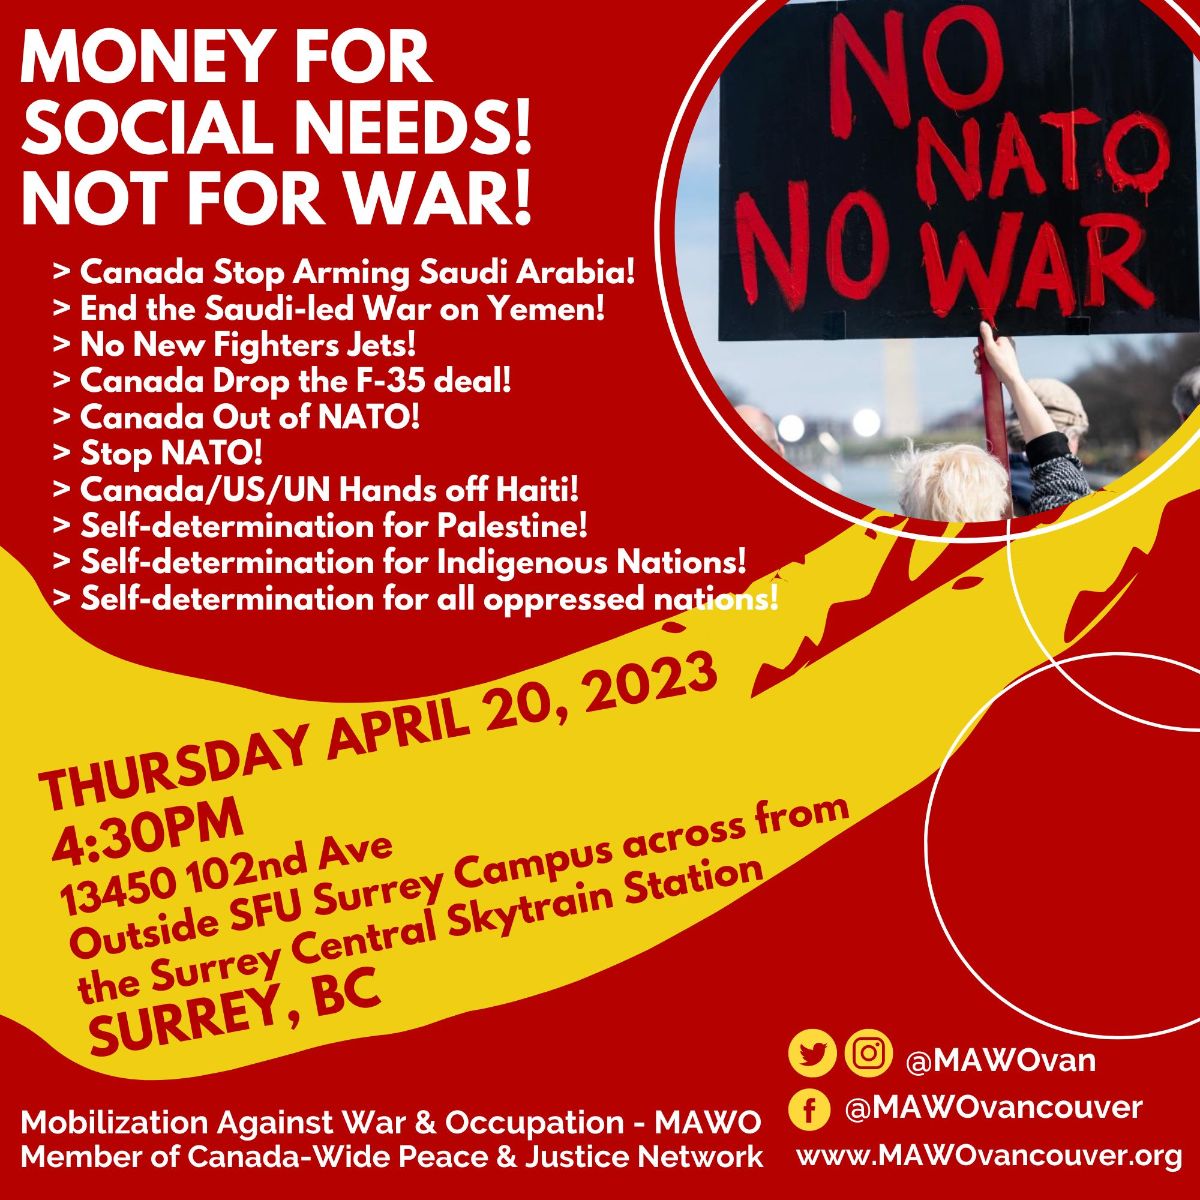 *Thurs Apr 20* Join to demand 'Money for Social Needs Not for War! mailchi.mp/8281675826c1/t… 4:30pm outside Surrey Ctrl Skytrain b/w University Dr. & City Pkwy. #CanadaStopArmingSaudi #FundPeaceNotWar #StopNATO #CanadaOutofNATO #EarthDay2023 #WarIsNotGreen #cdnpoli #EarthDayEndWar